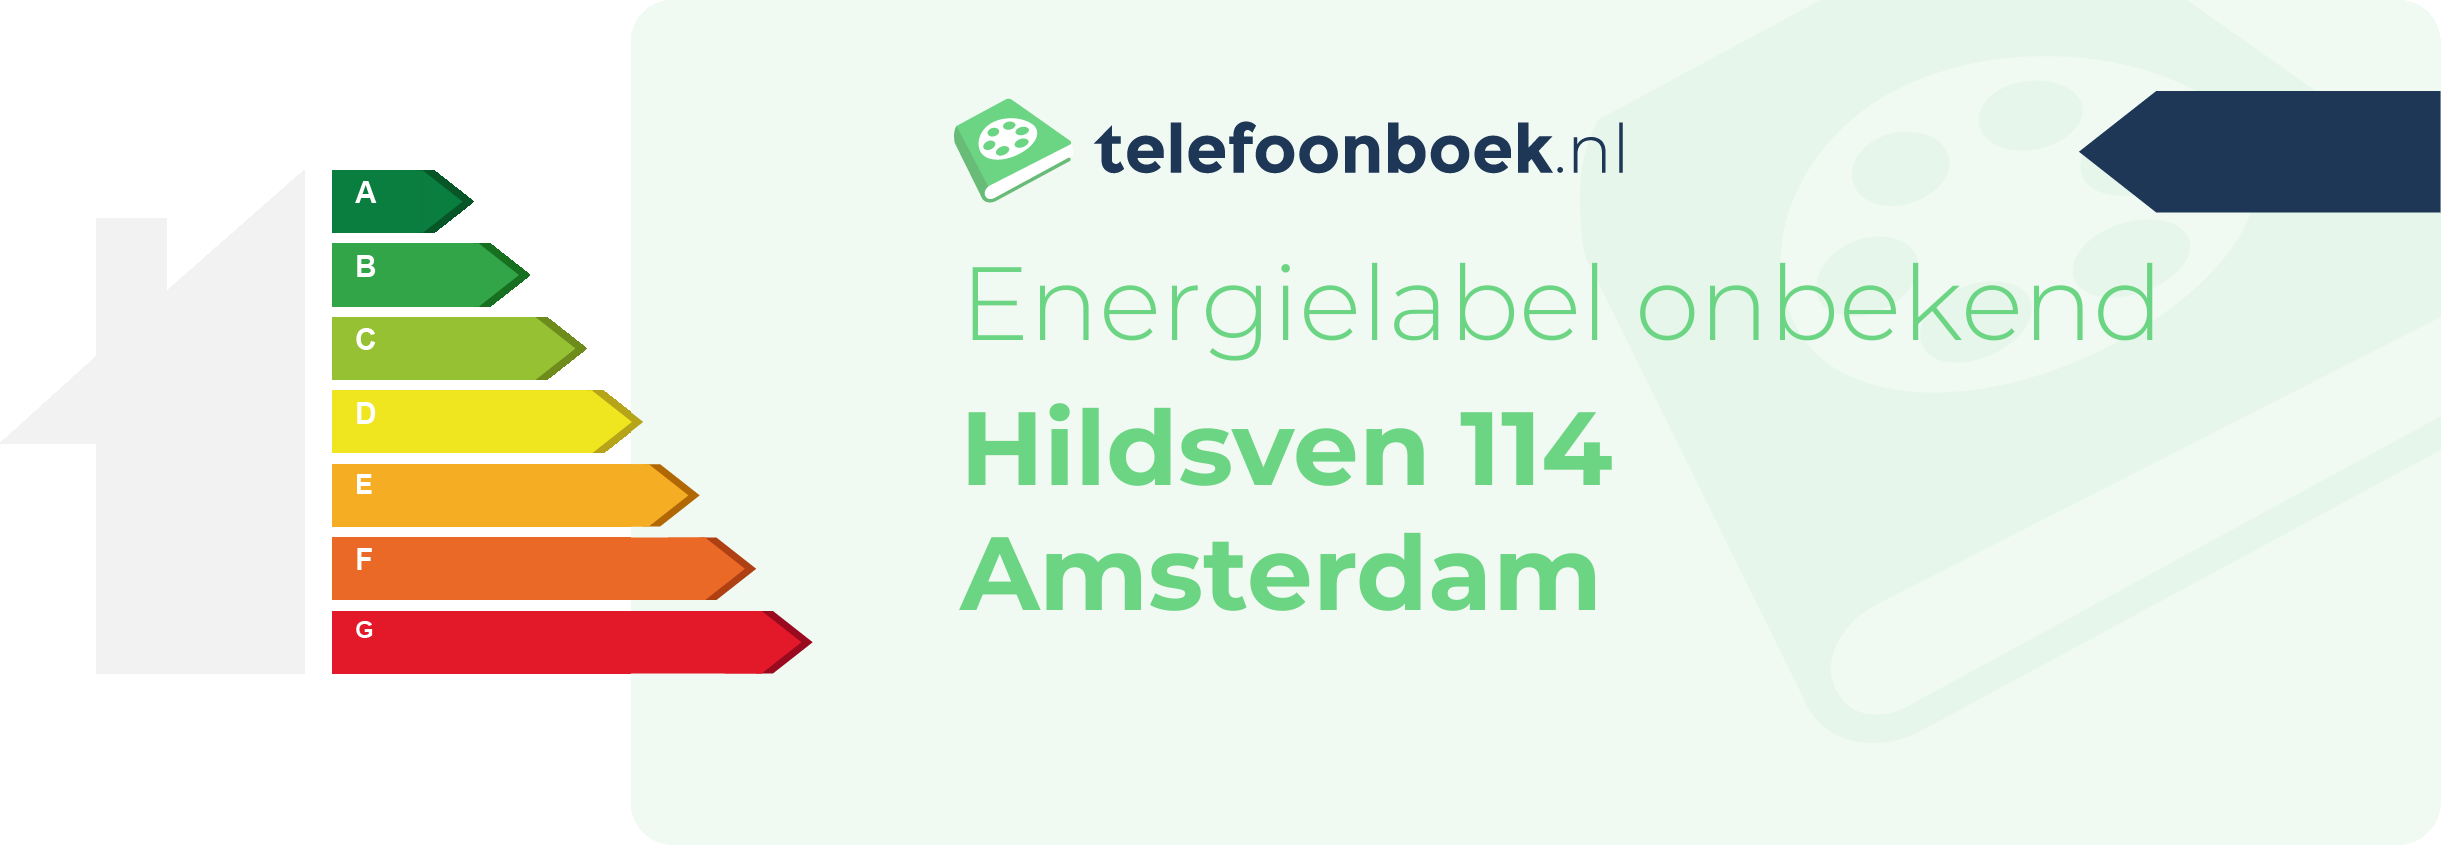 Energielabel Hildsven 114 Amsterdam